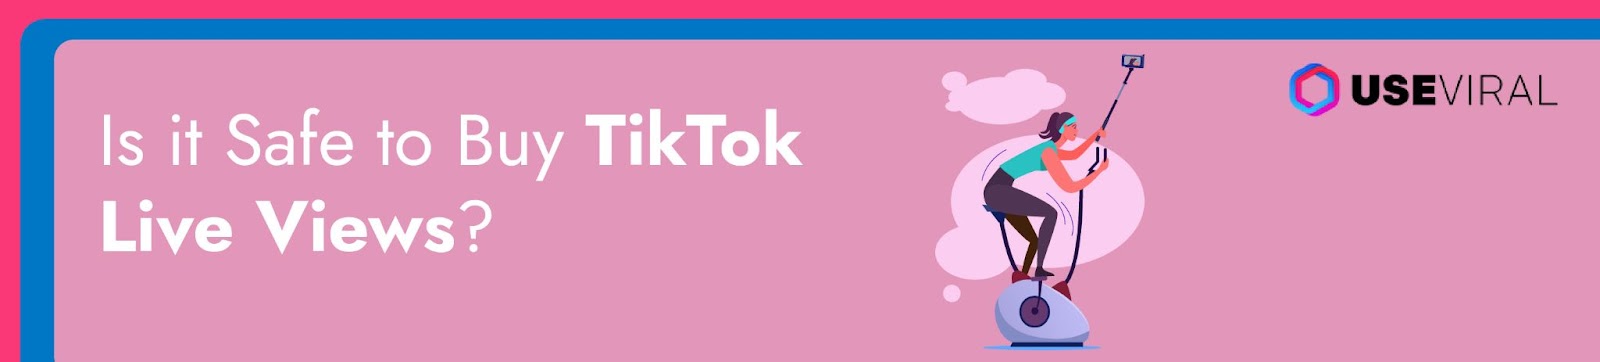 Is it Safe to Buy TikTok Live Views?